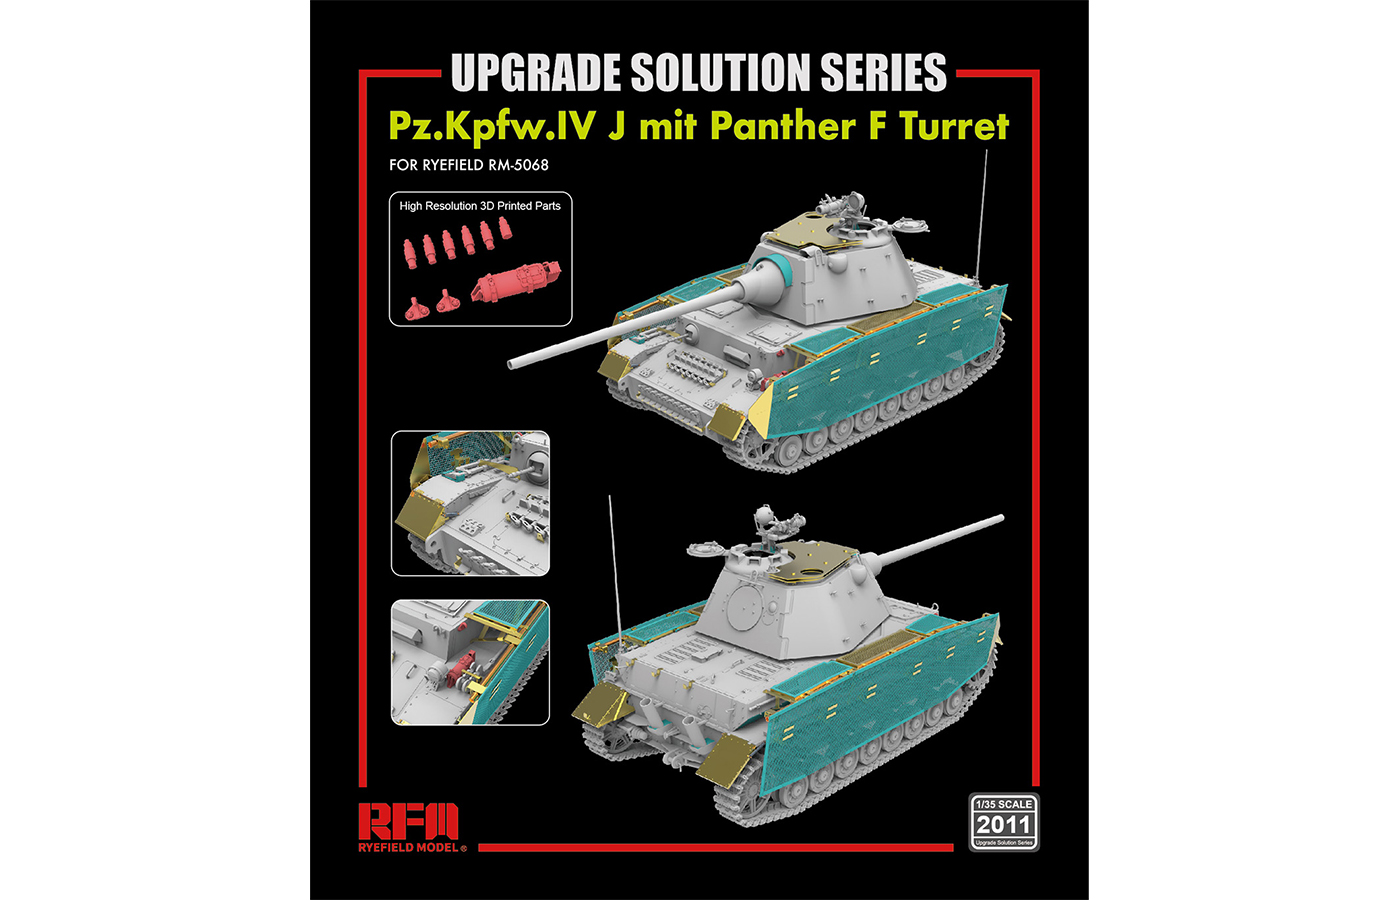 RM-2011  Pz.Kpfw.IV J mit Panther F Turret UPGRADE SOLUTION SERIES